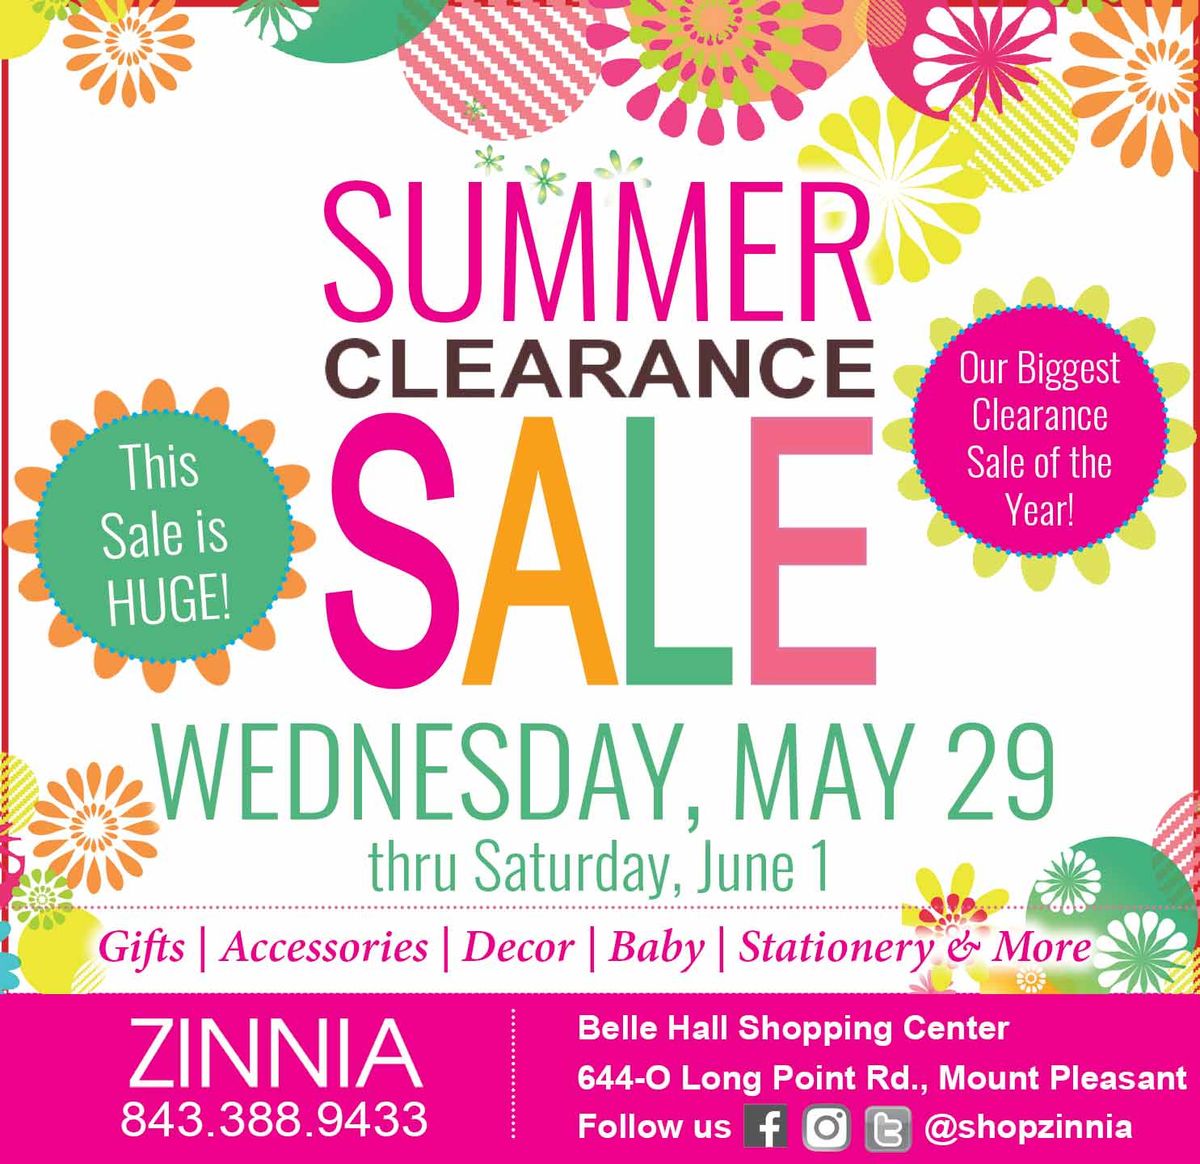 ZINNIA's HUGE Summer Clearance Sale!